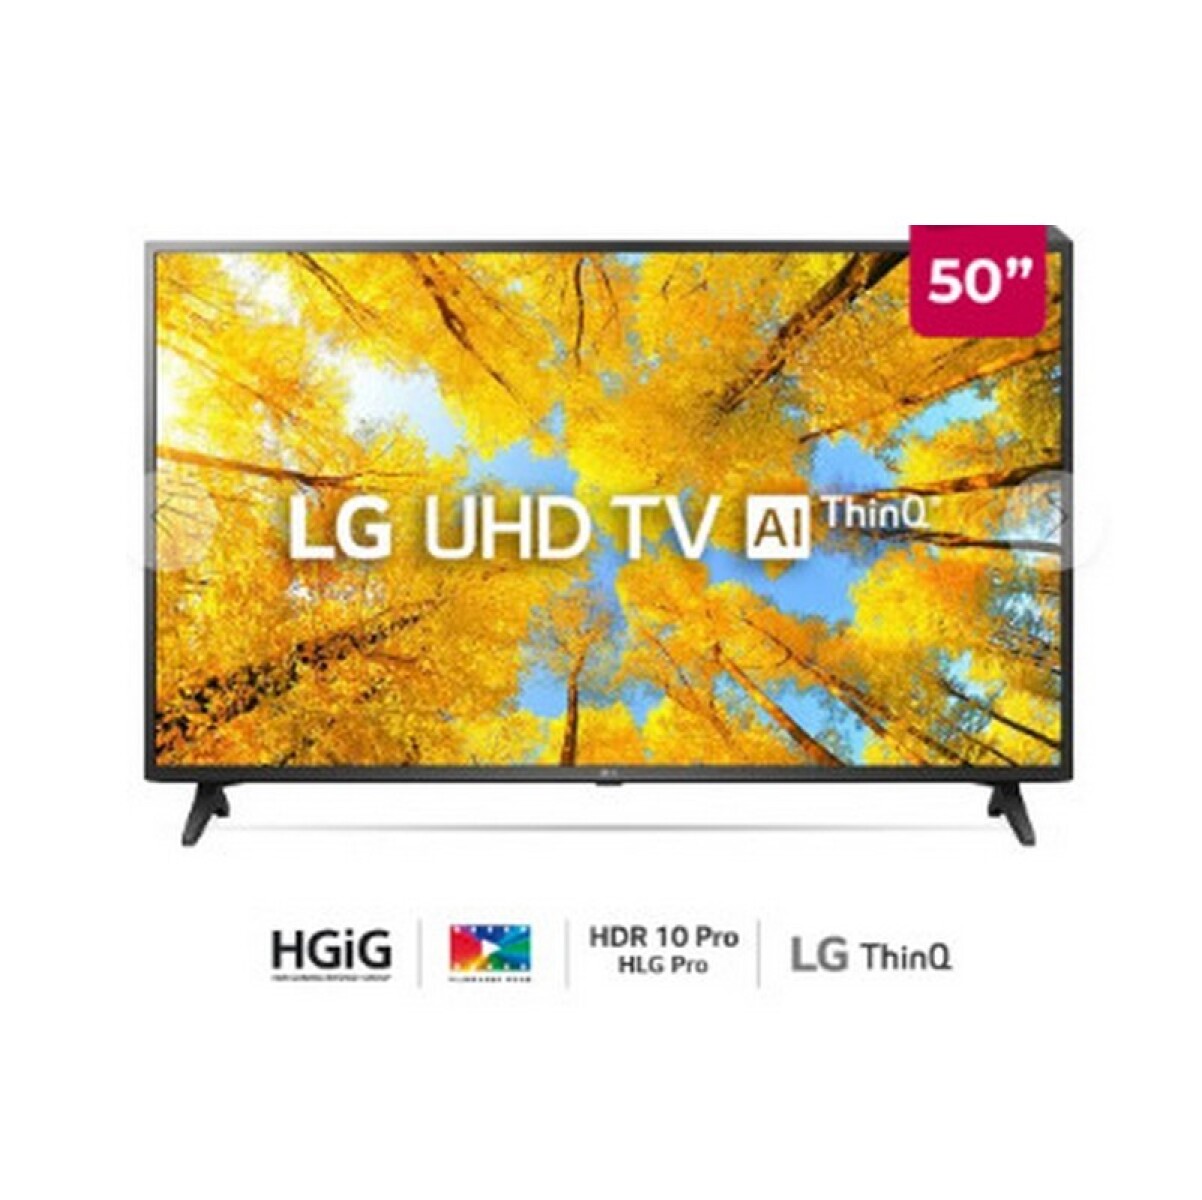 TV LG 50" LED. SMART TV UHD 